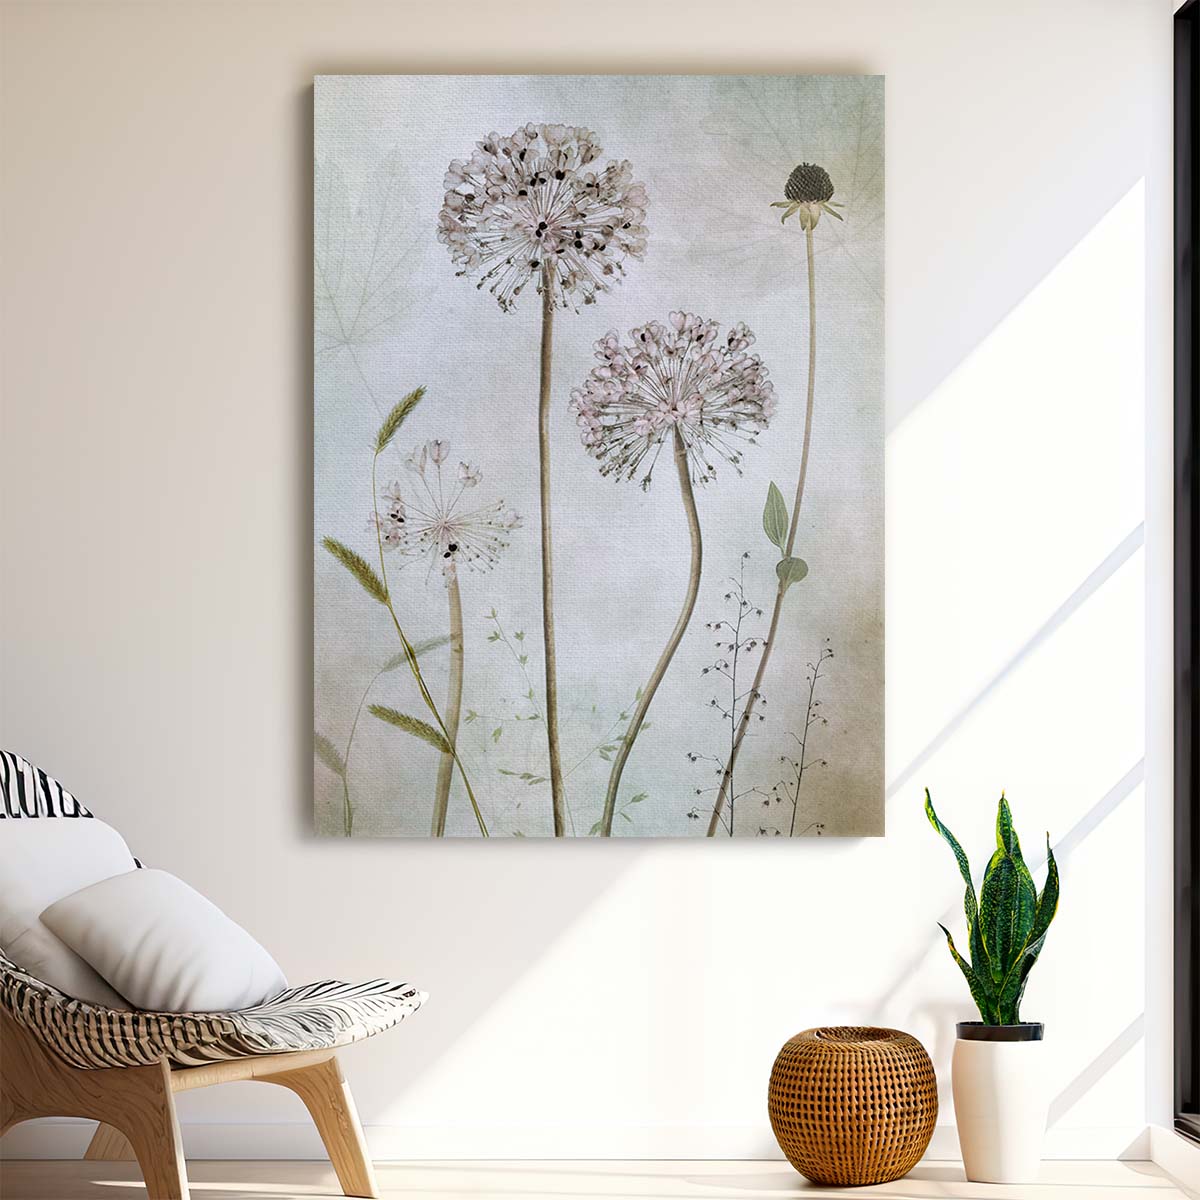 Allium Flower Macro Photography Textured Botanical Still Life Art by Luxuriance Designs, made in USA